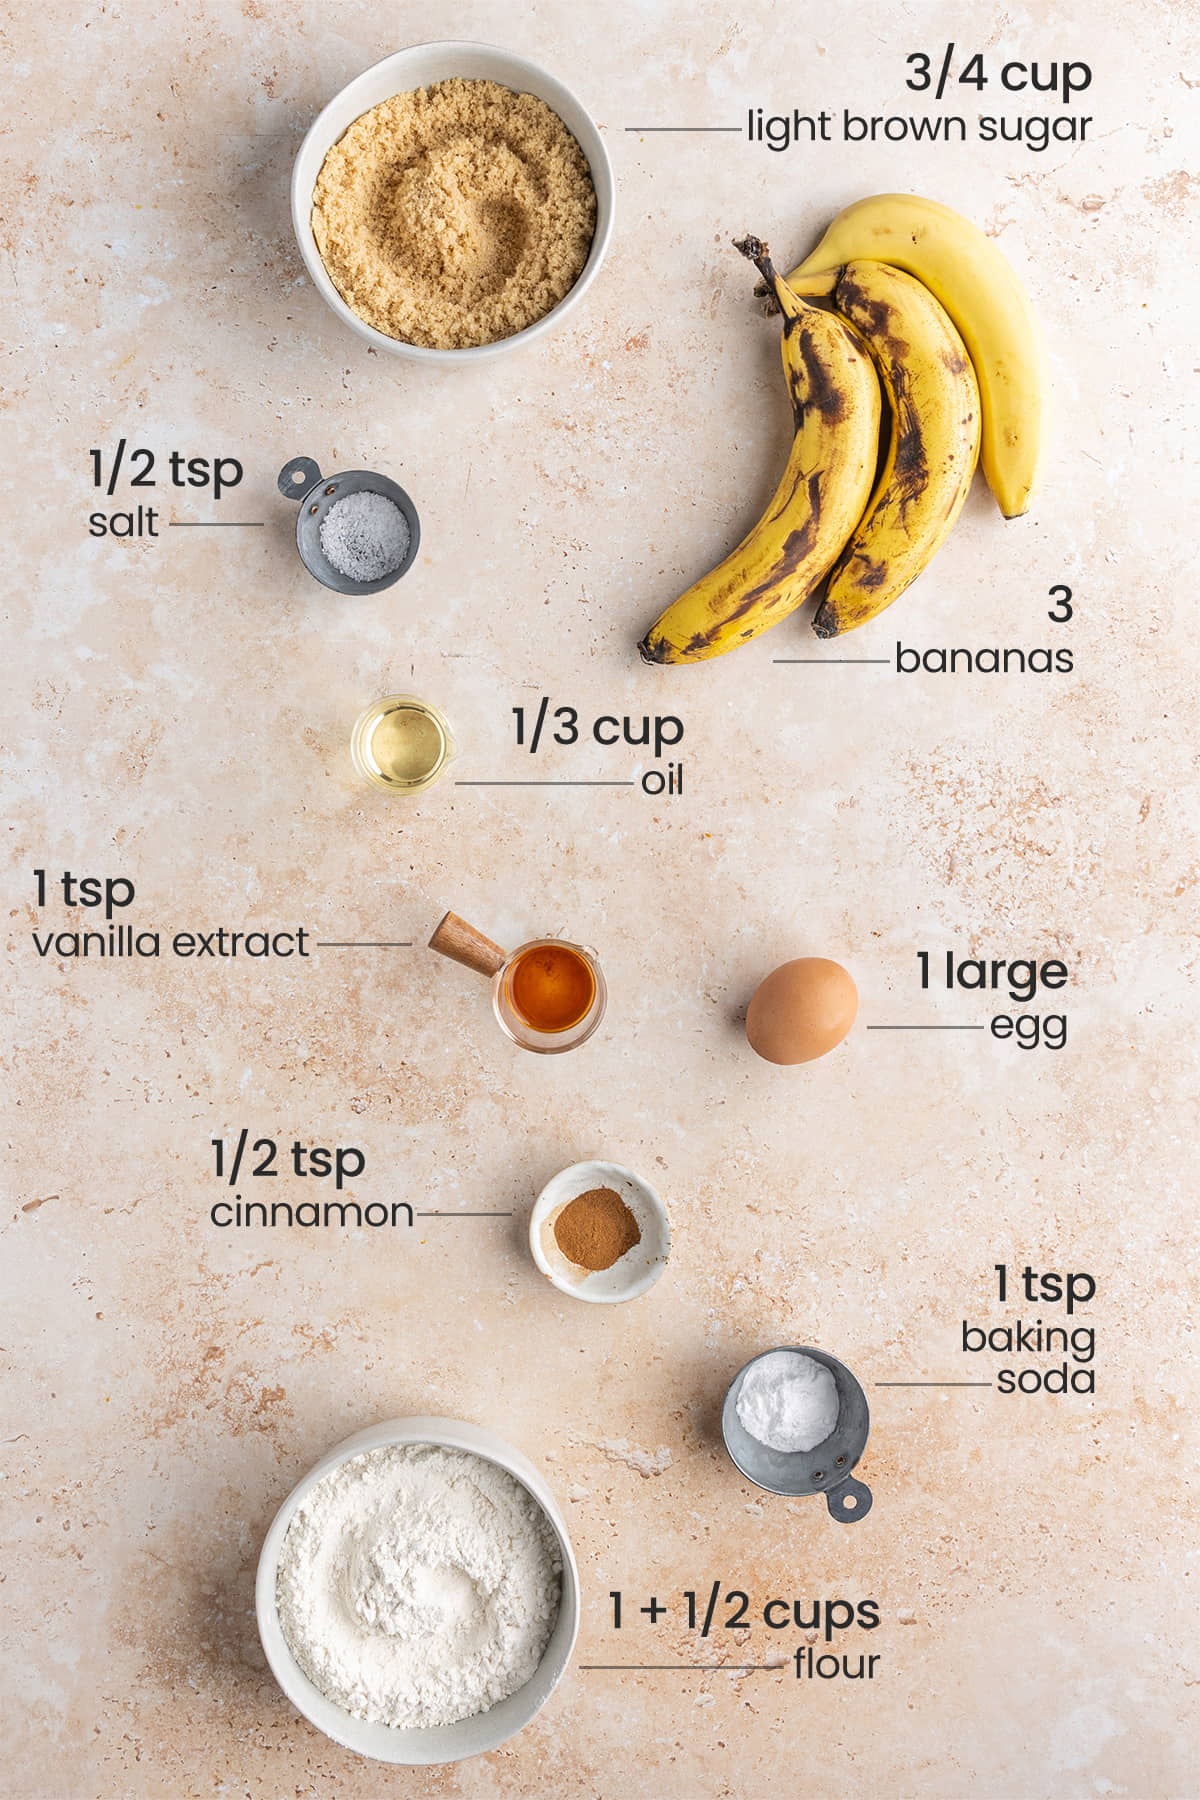 ingredients for cream cheese banana bread - light brown sugar, salt, bananas, oil, vanilla extract, egg, cinnamon, baking soda, flour